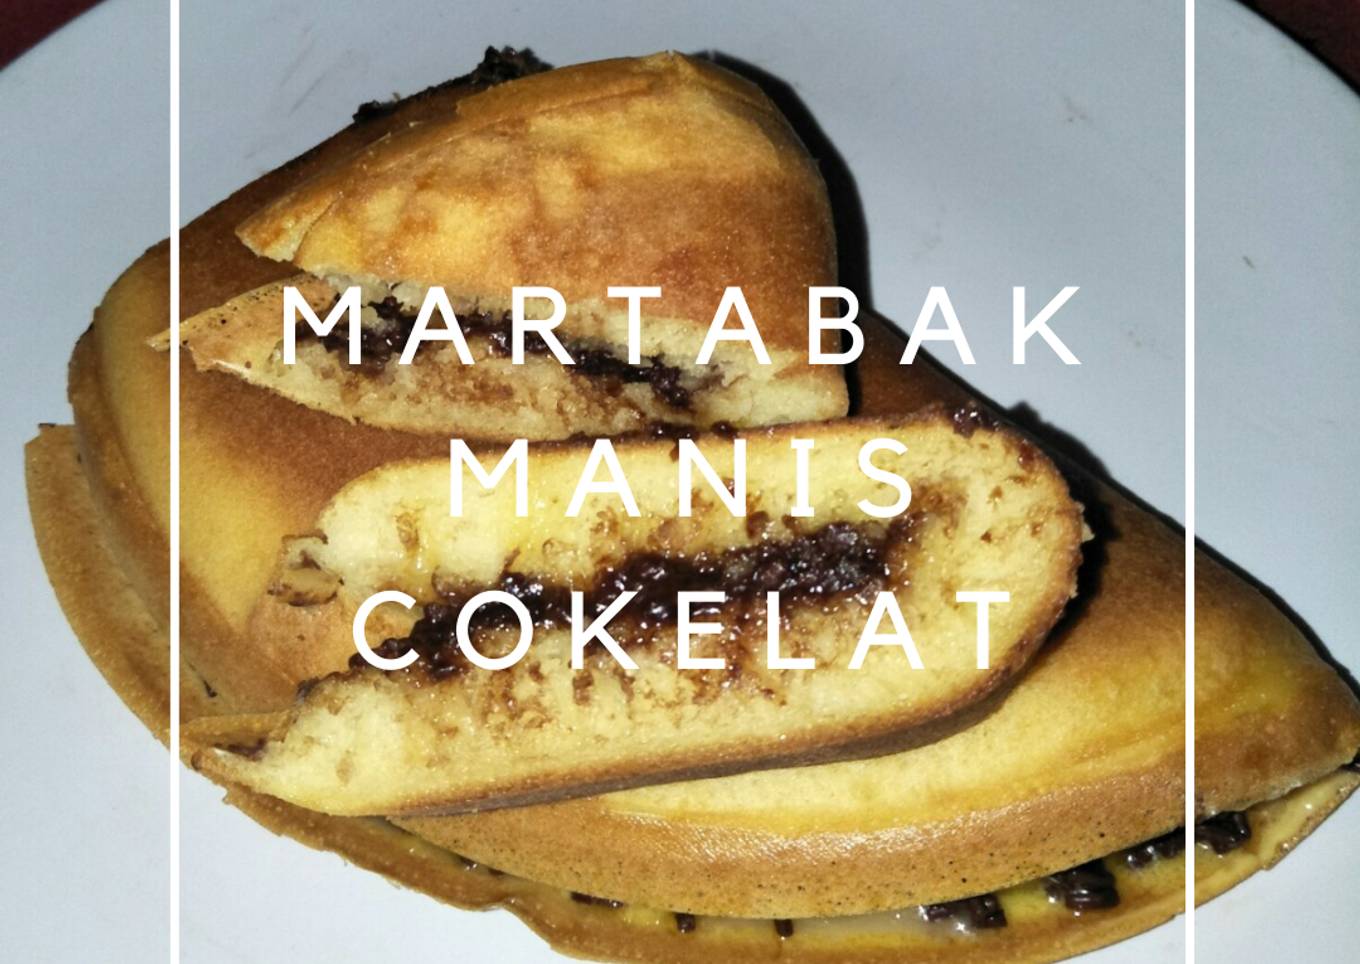 54. Martabak Manis Cokelat